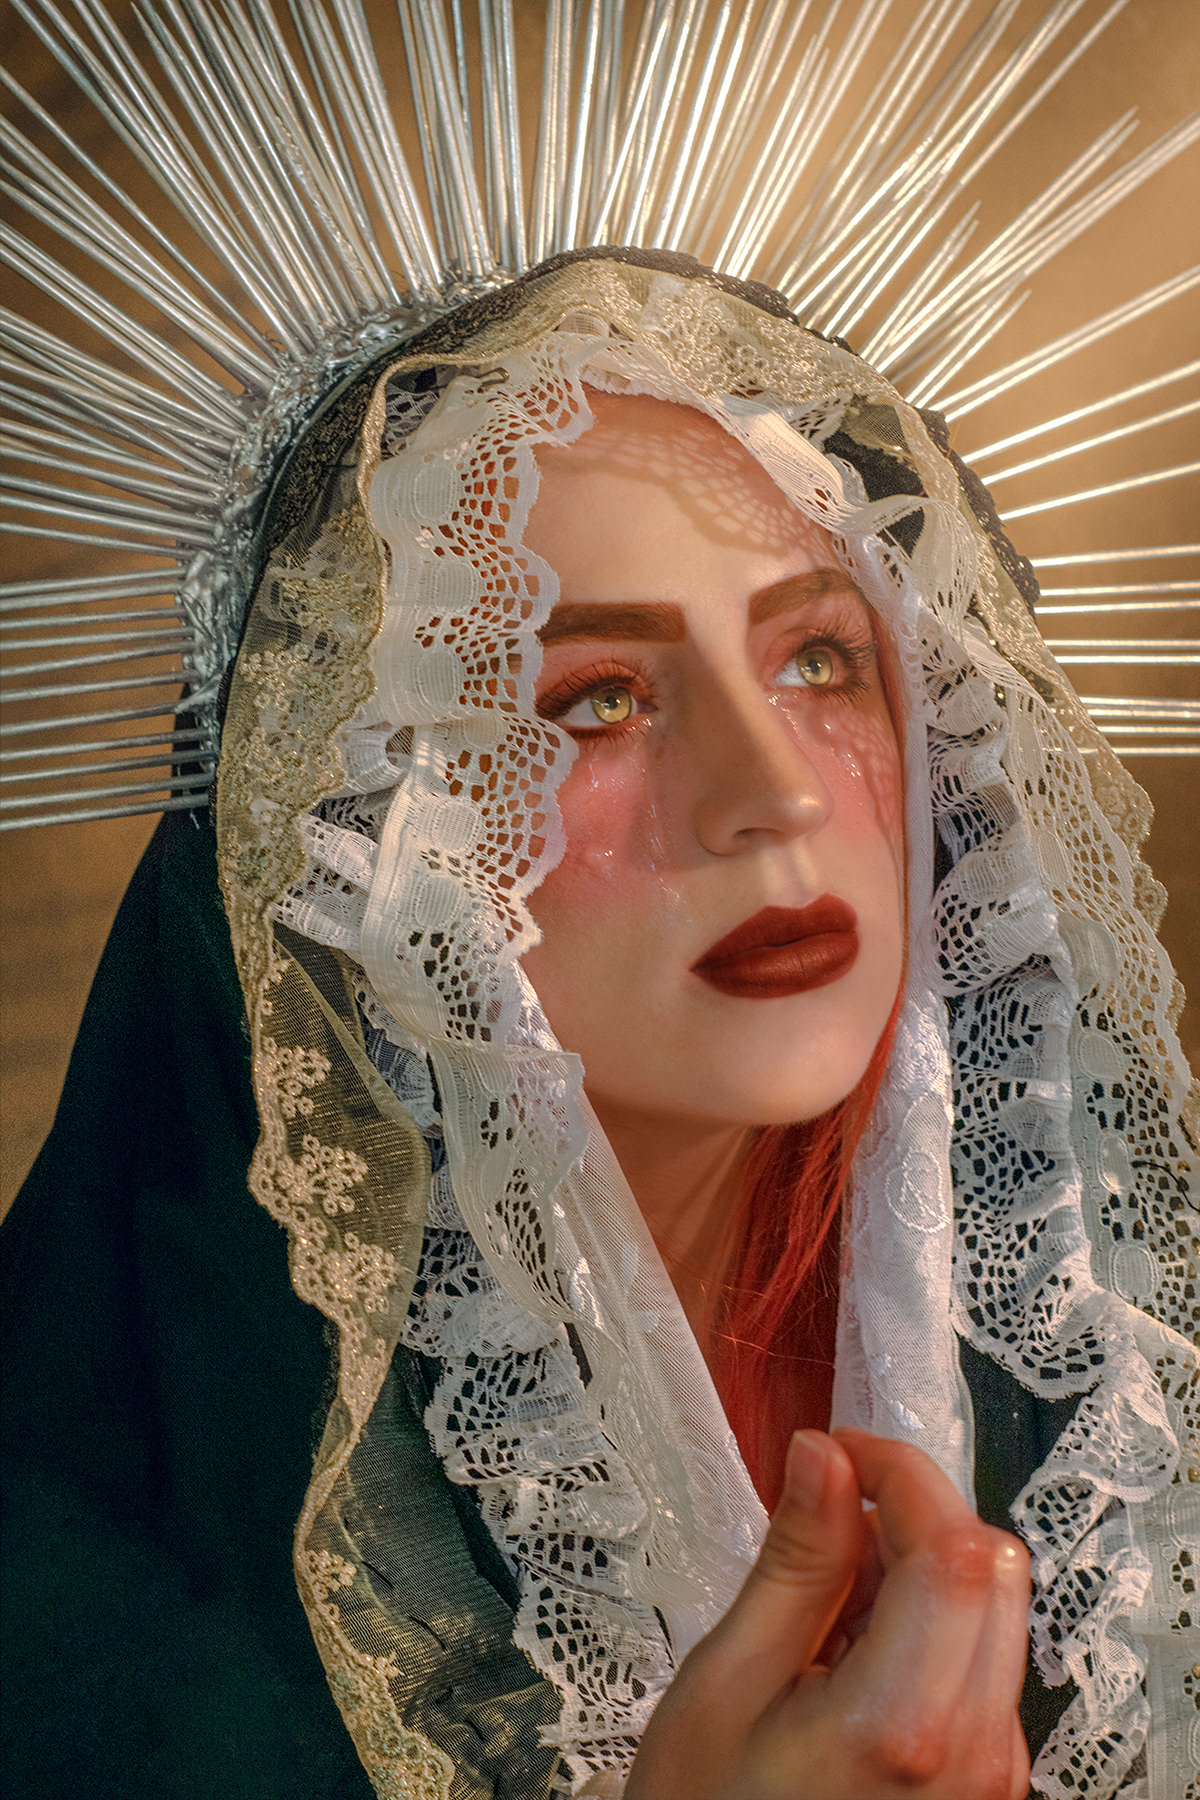 La Virgen de los Dolores on Behance